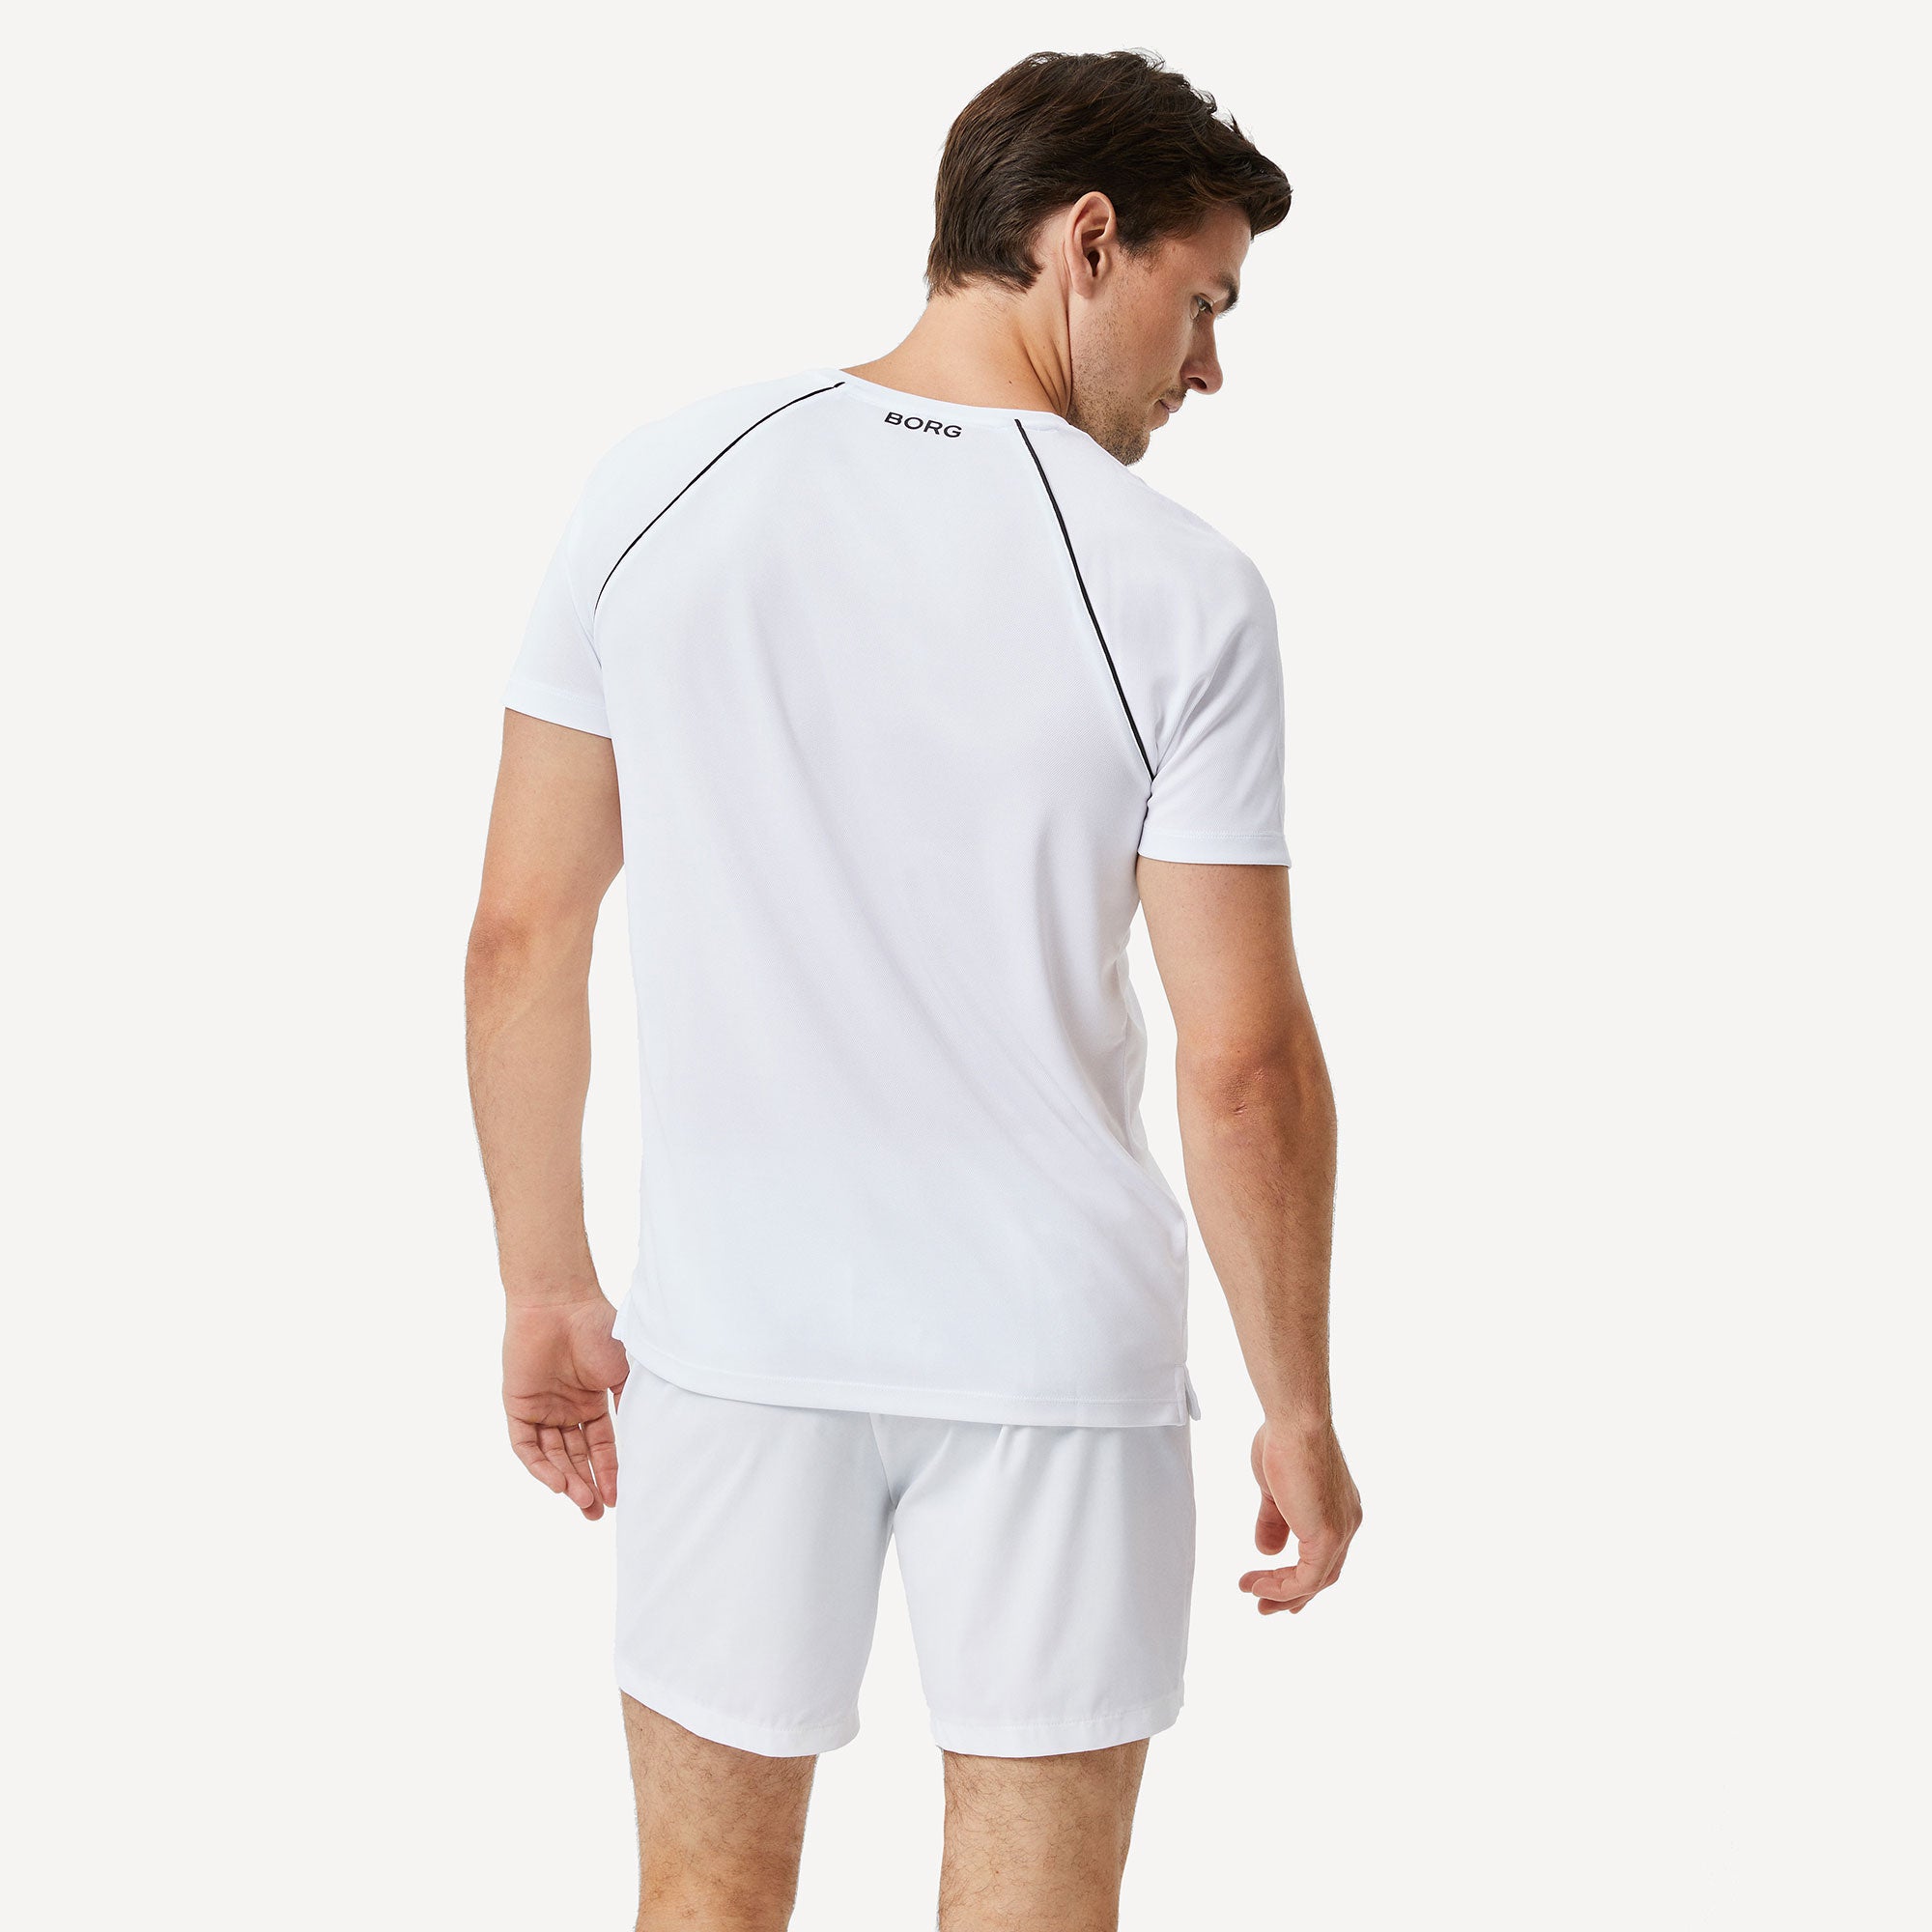 Björn Borg Ace Racquet Men's Tennis Shirt - White (2)